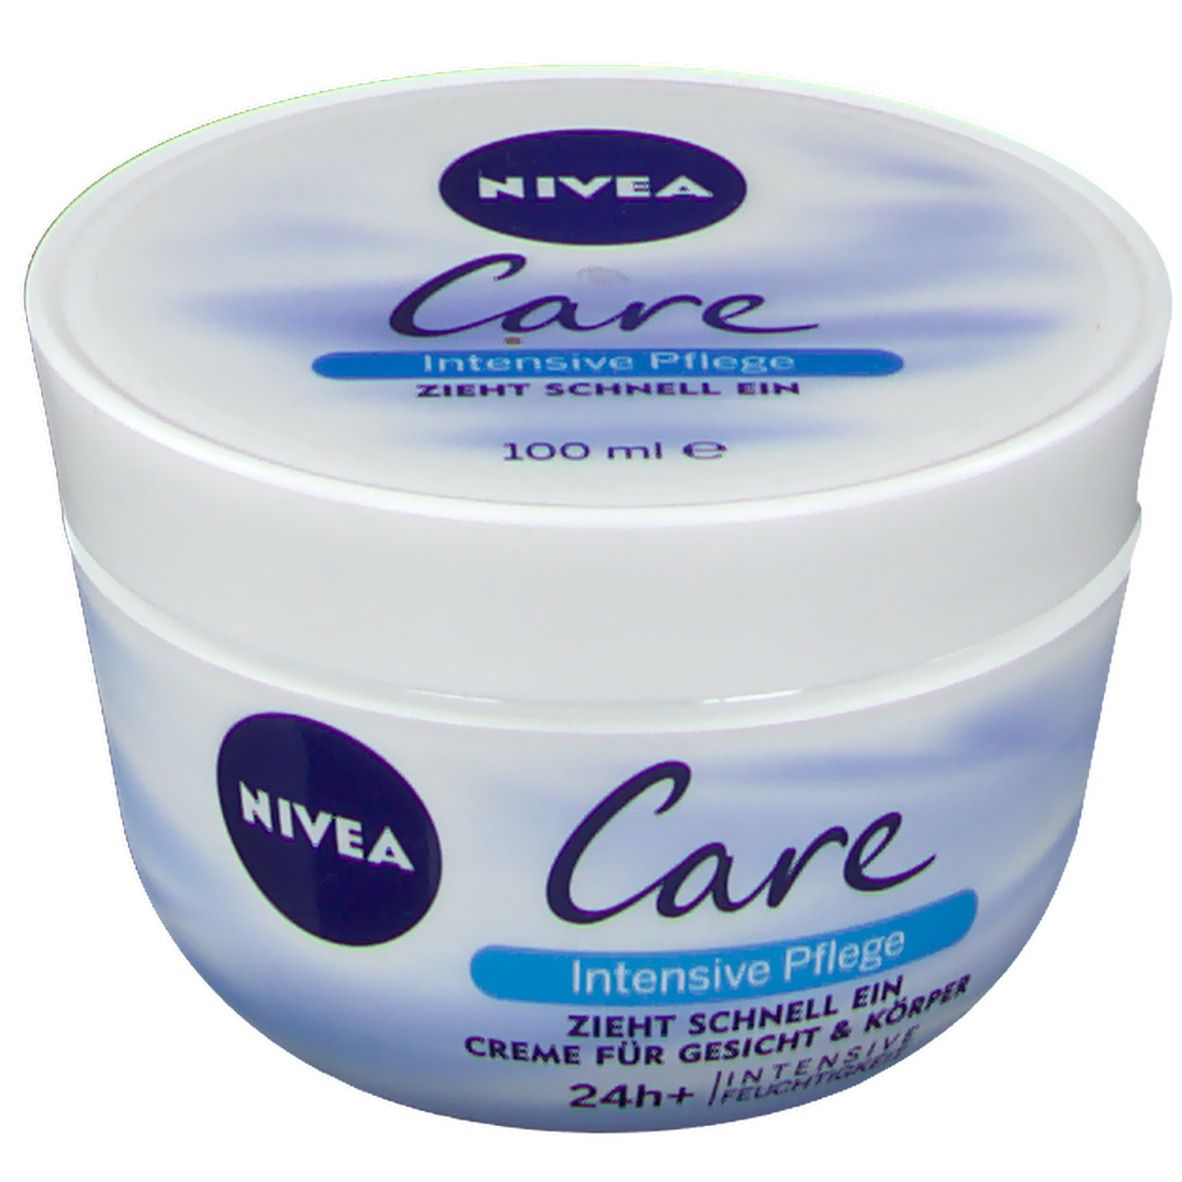 NIVEA® CARE Intensive Pflege